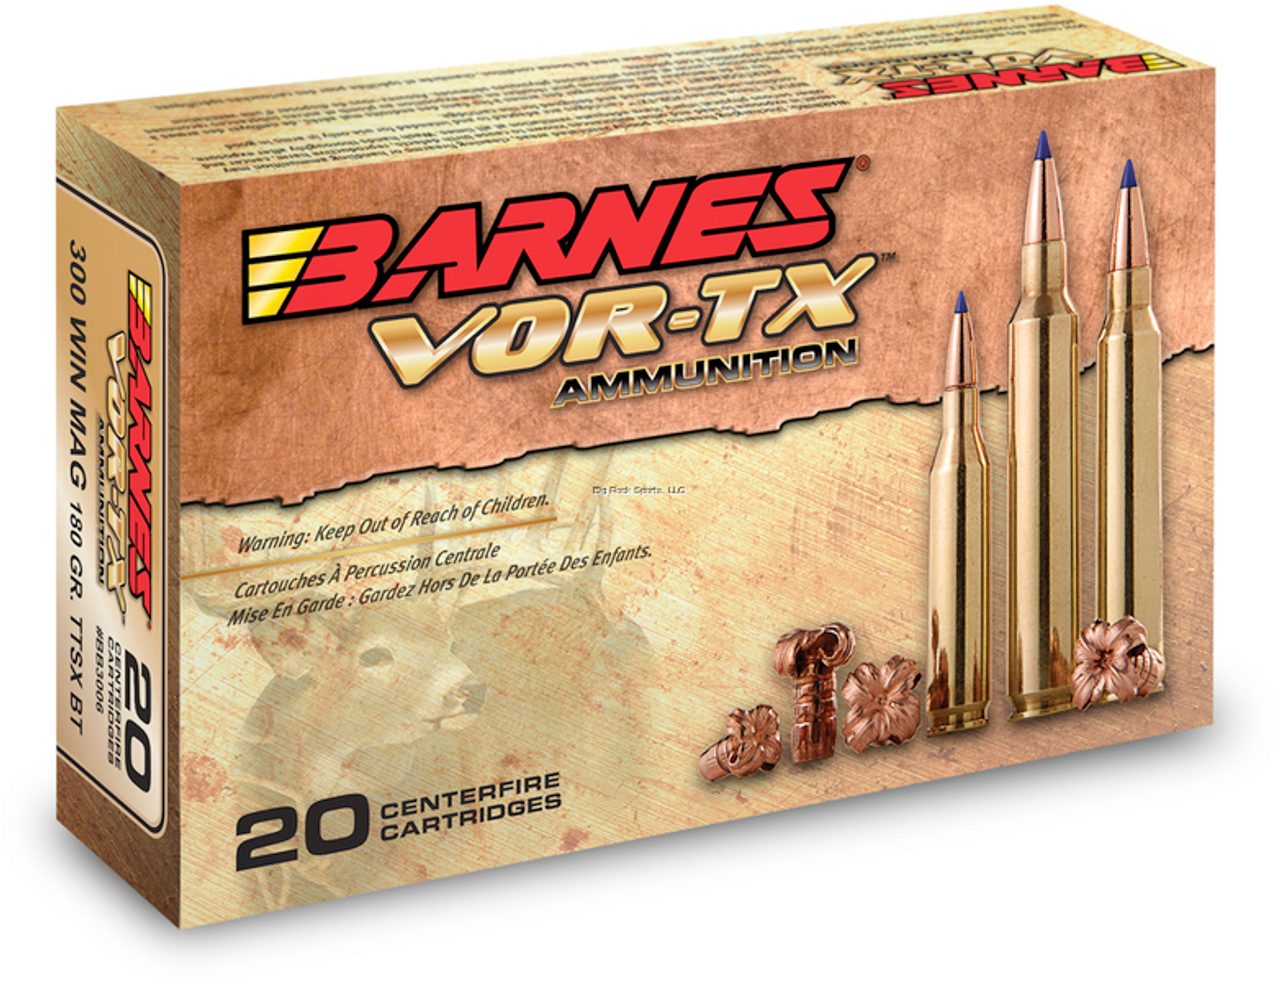 Barnes VOR-TX Rifle Ammo 7MM-08 REM, TTSX BT, 120 Grains, 3005 fps, 20 Rnds